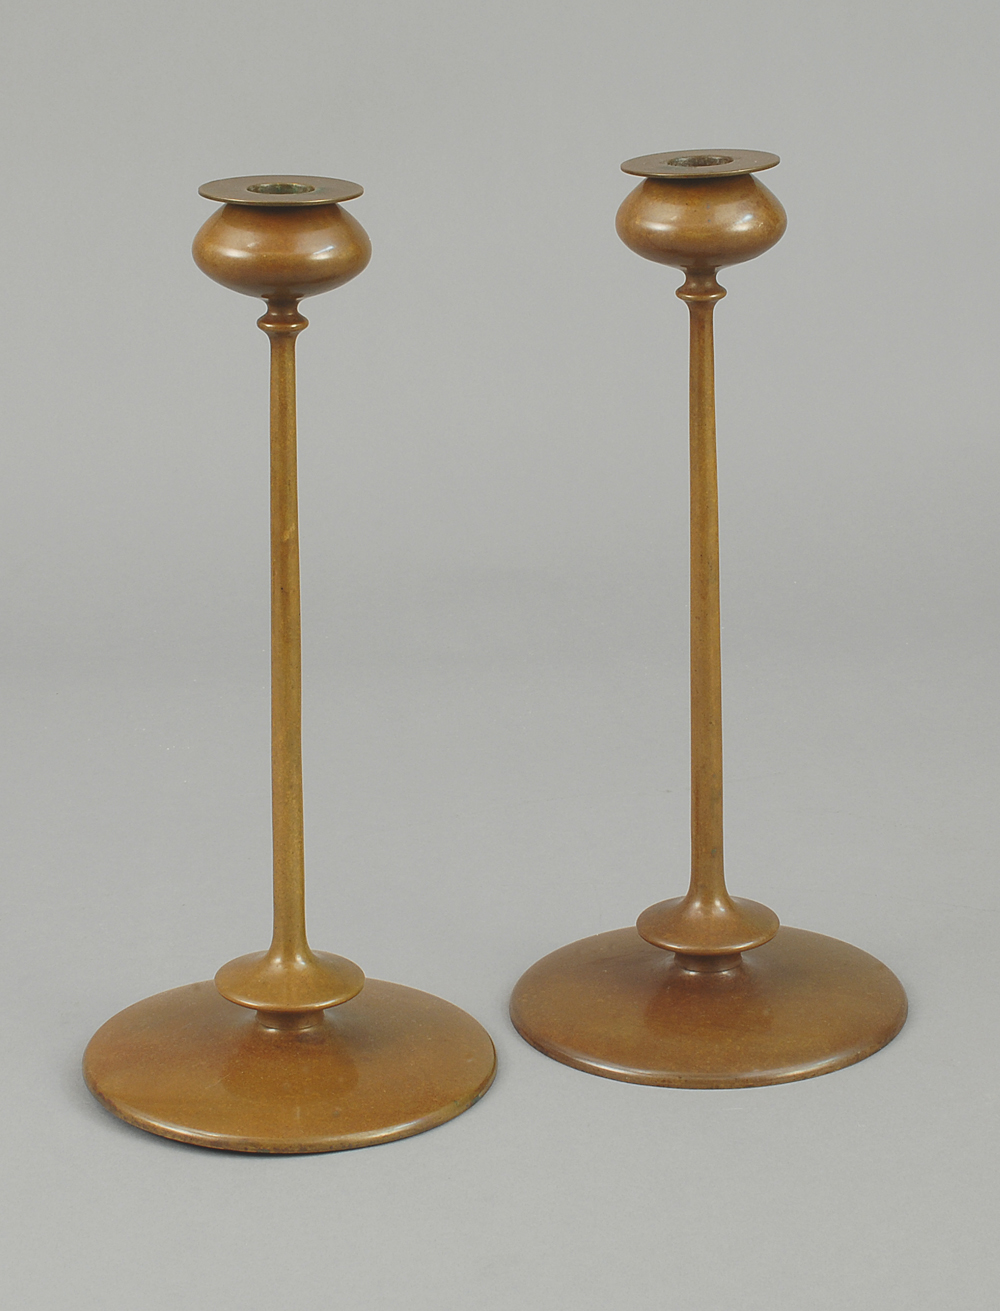 Pair of Candlesticks, Robert R. Jarvie, Copper, c. 1905-1911, 12" high